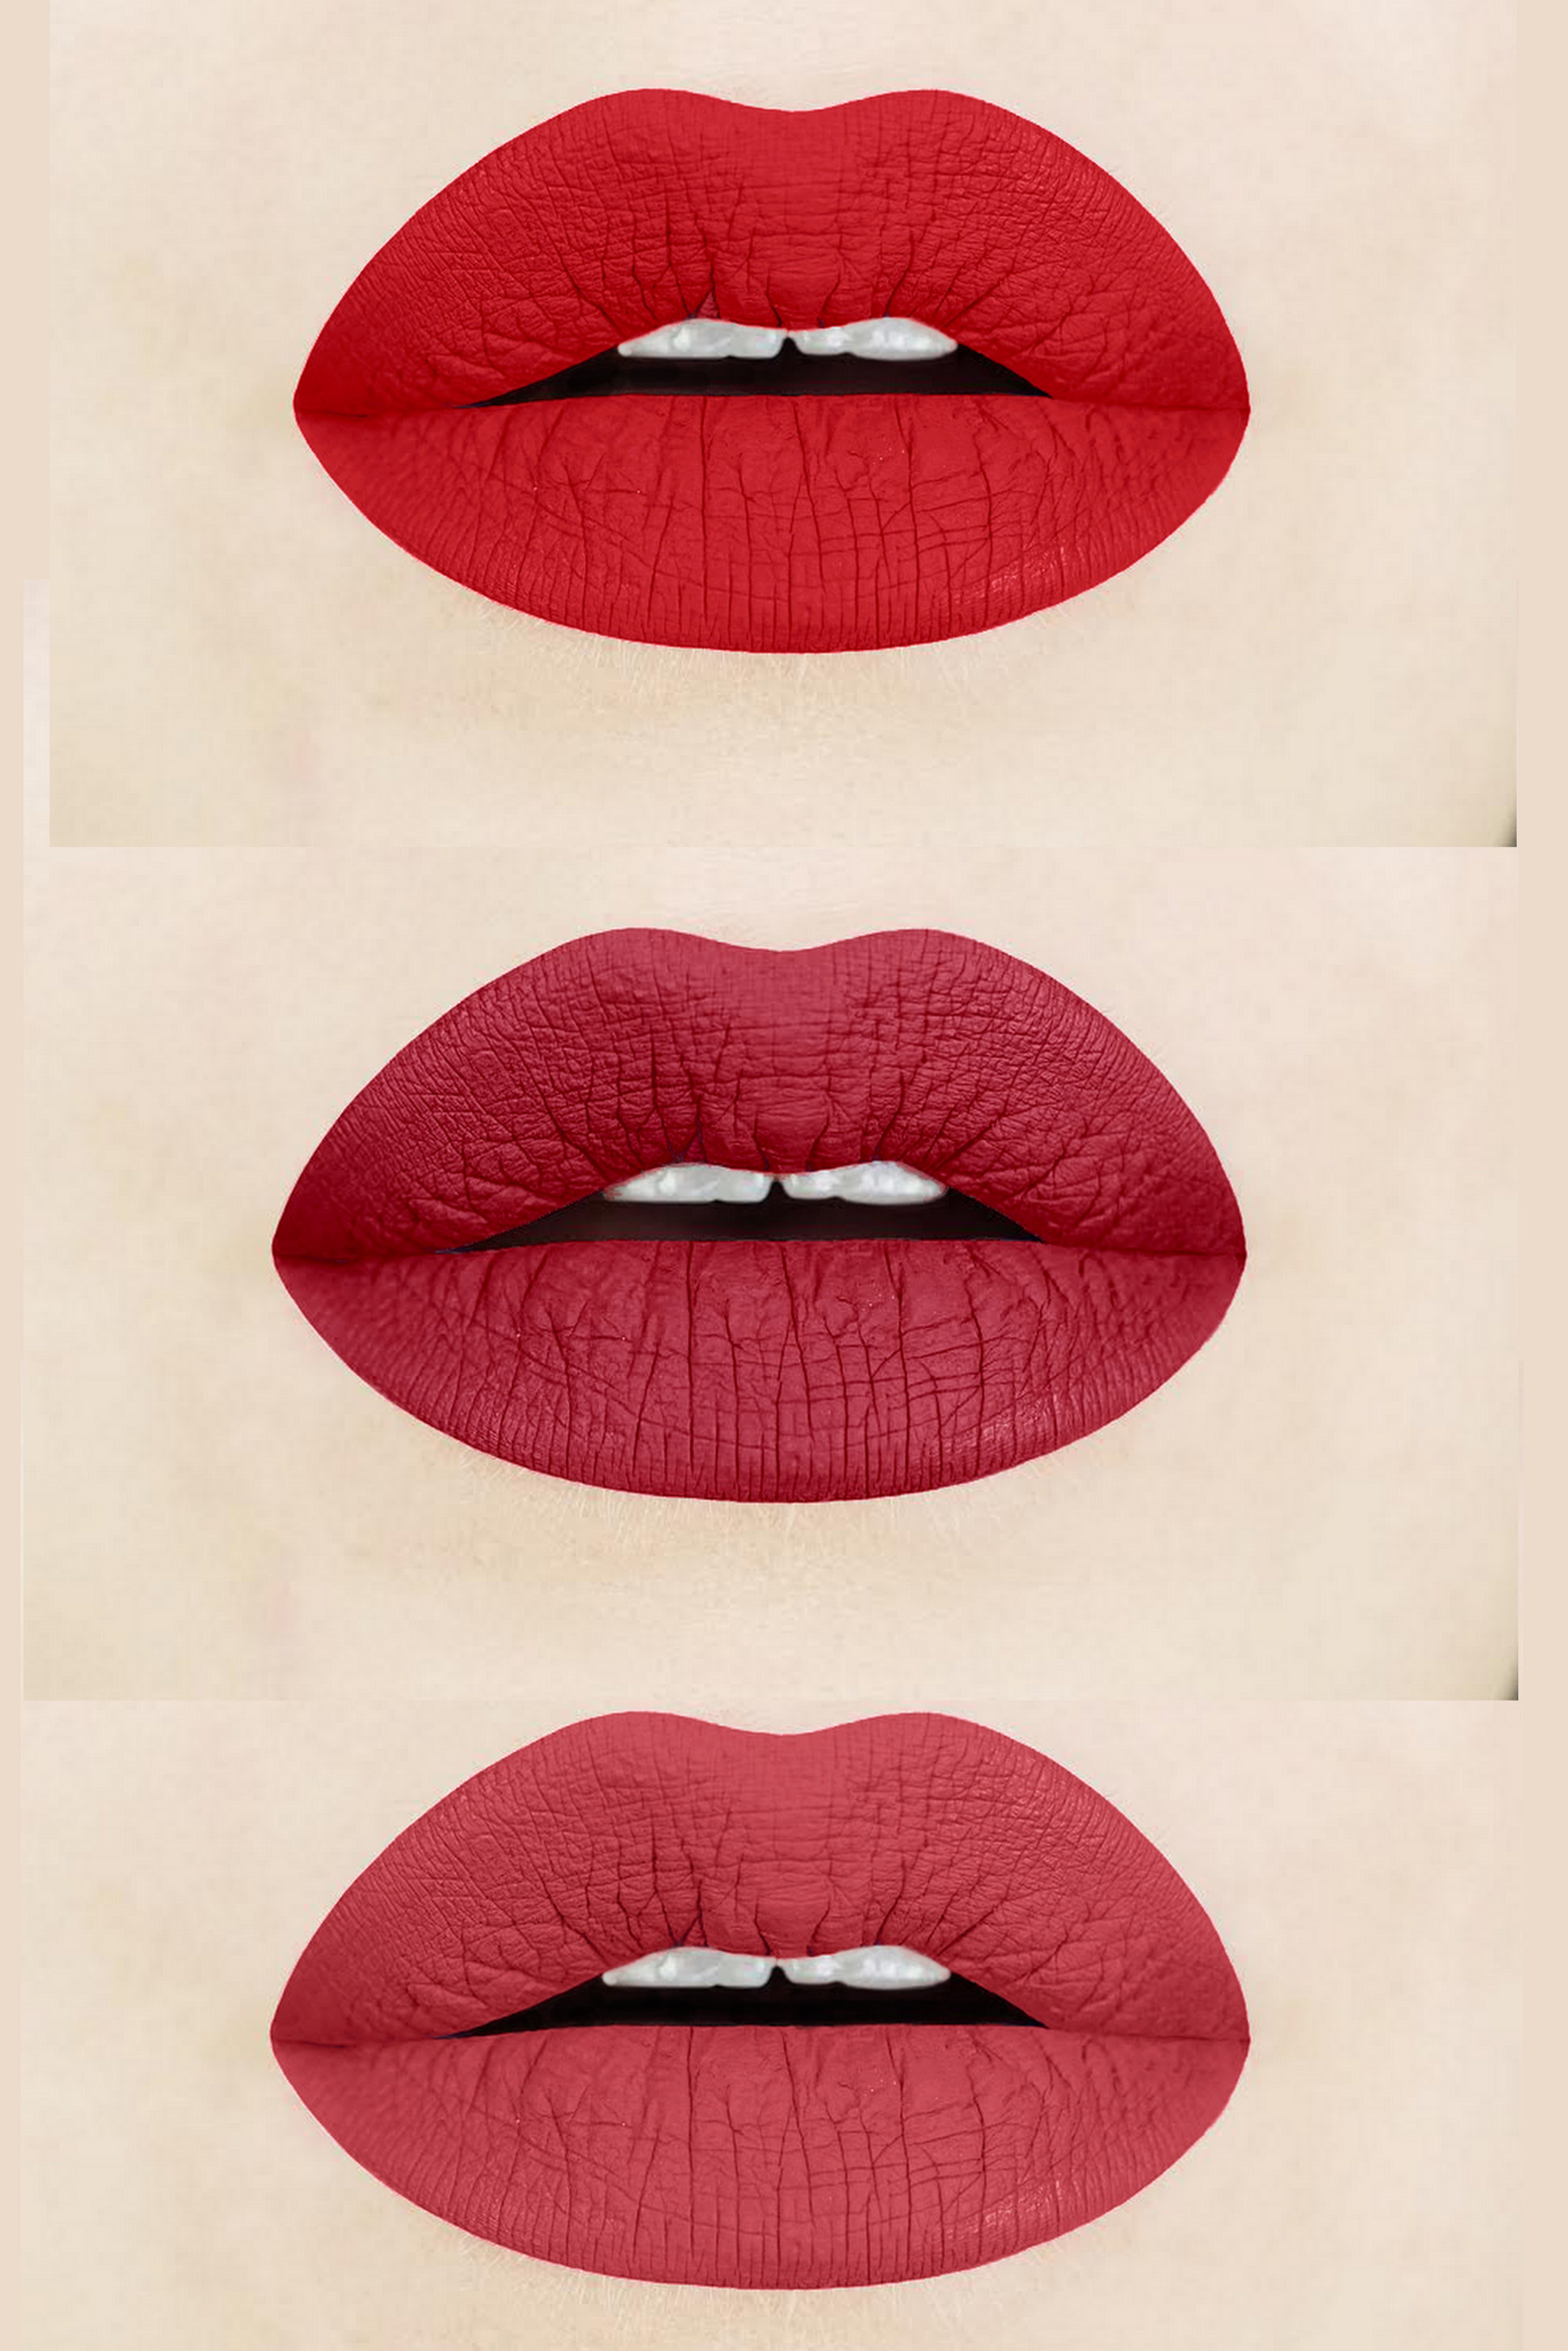 Aromi Beauty's Red Liquid Lipsticks - Flamenco, Power, & Brick Red